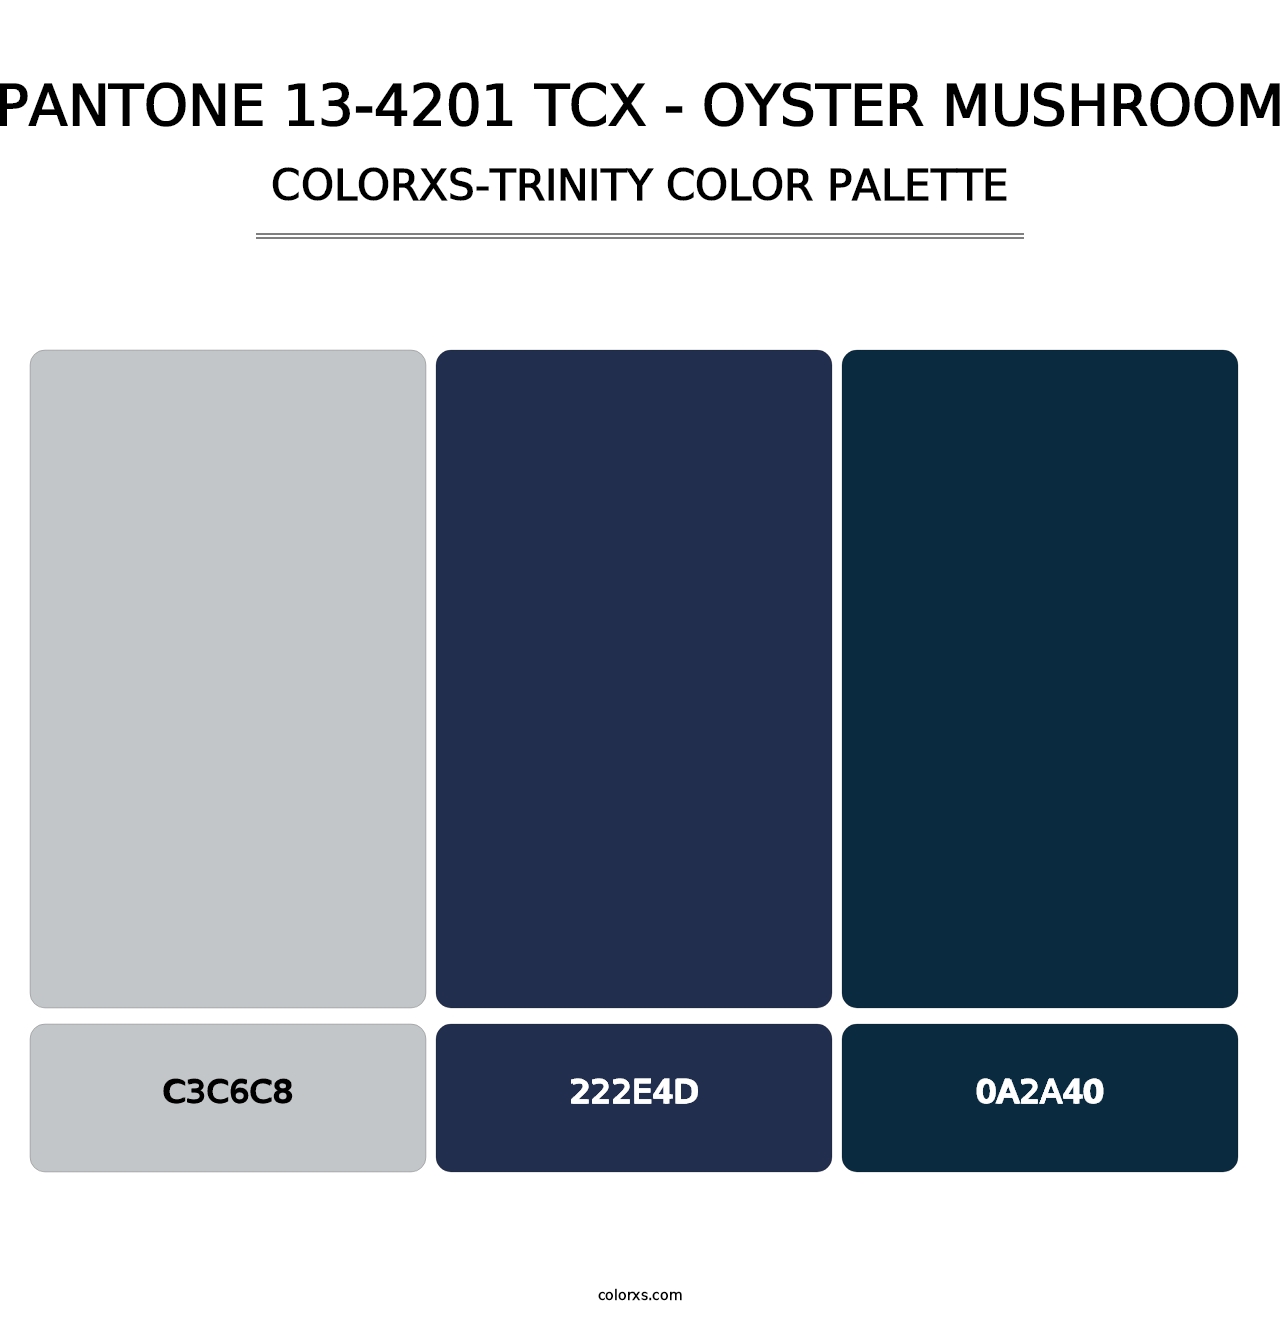 PANTONE 13-4201 TCX - Oyster Mushroom - Colorxs Trinity Palette